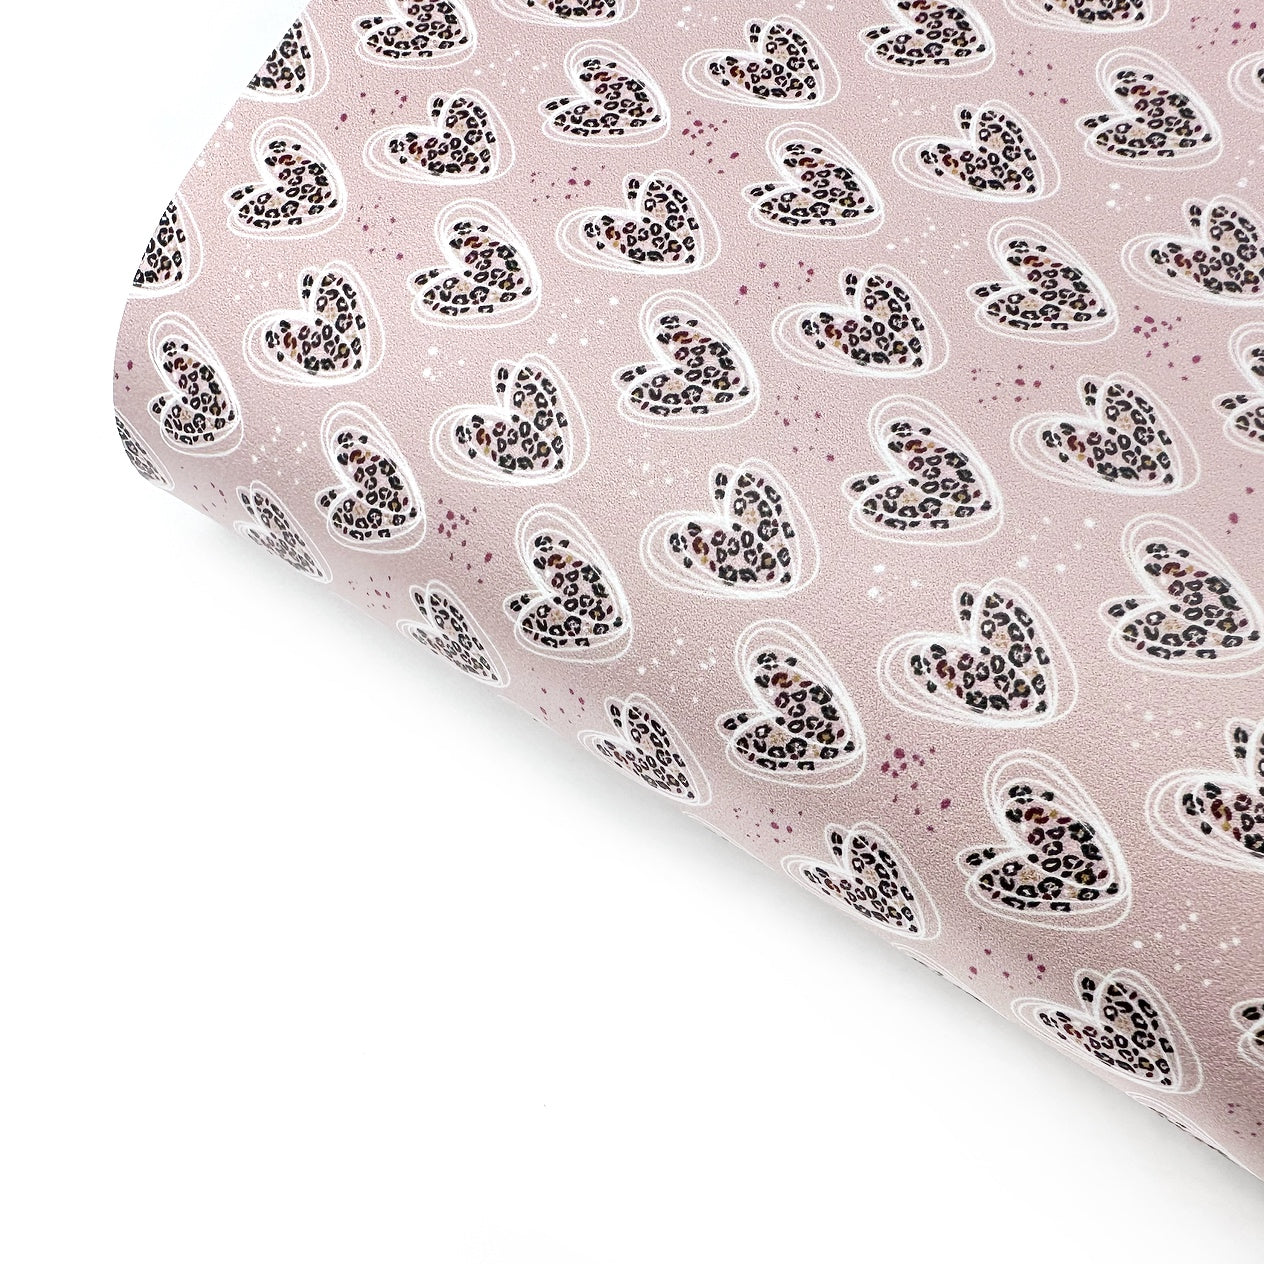 Leopard Hearts Premium Faux Leather Fabric Sheets